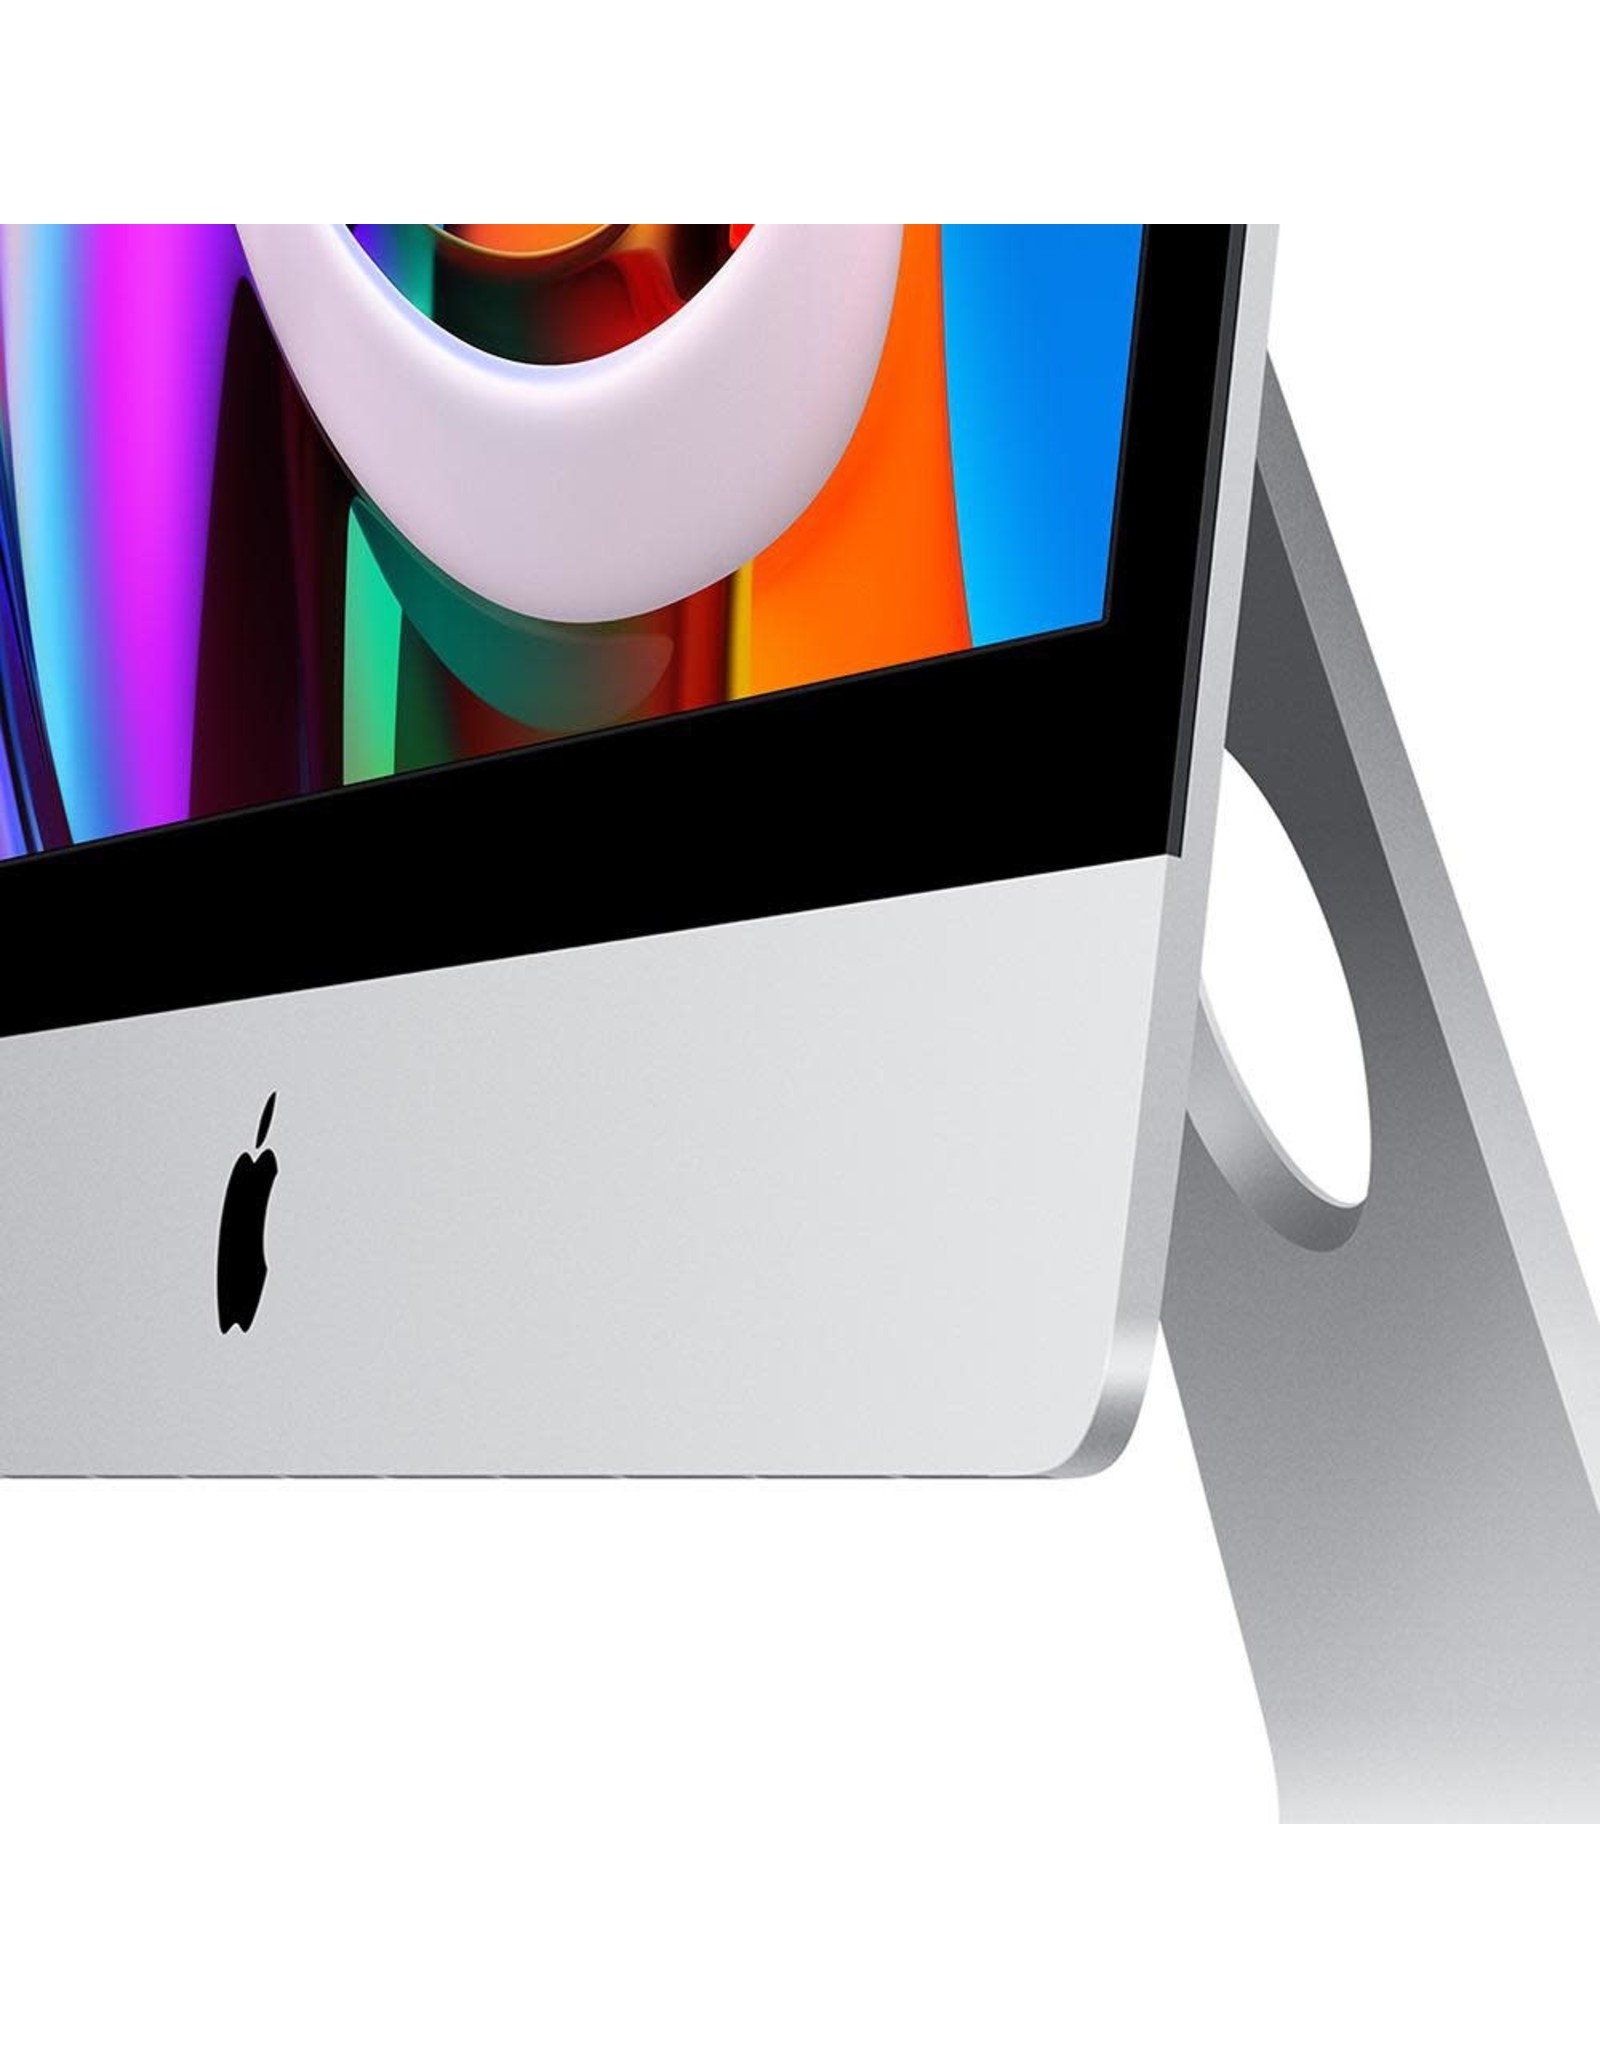 Apple 27-inch iMac Retina 5K 3.1GHz 6-core 10th-generation Intel Core i5/8GB/256GB SSD/Radeon Pro 5300 4GB